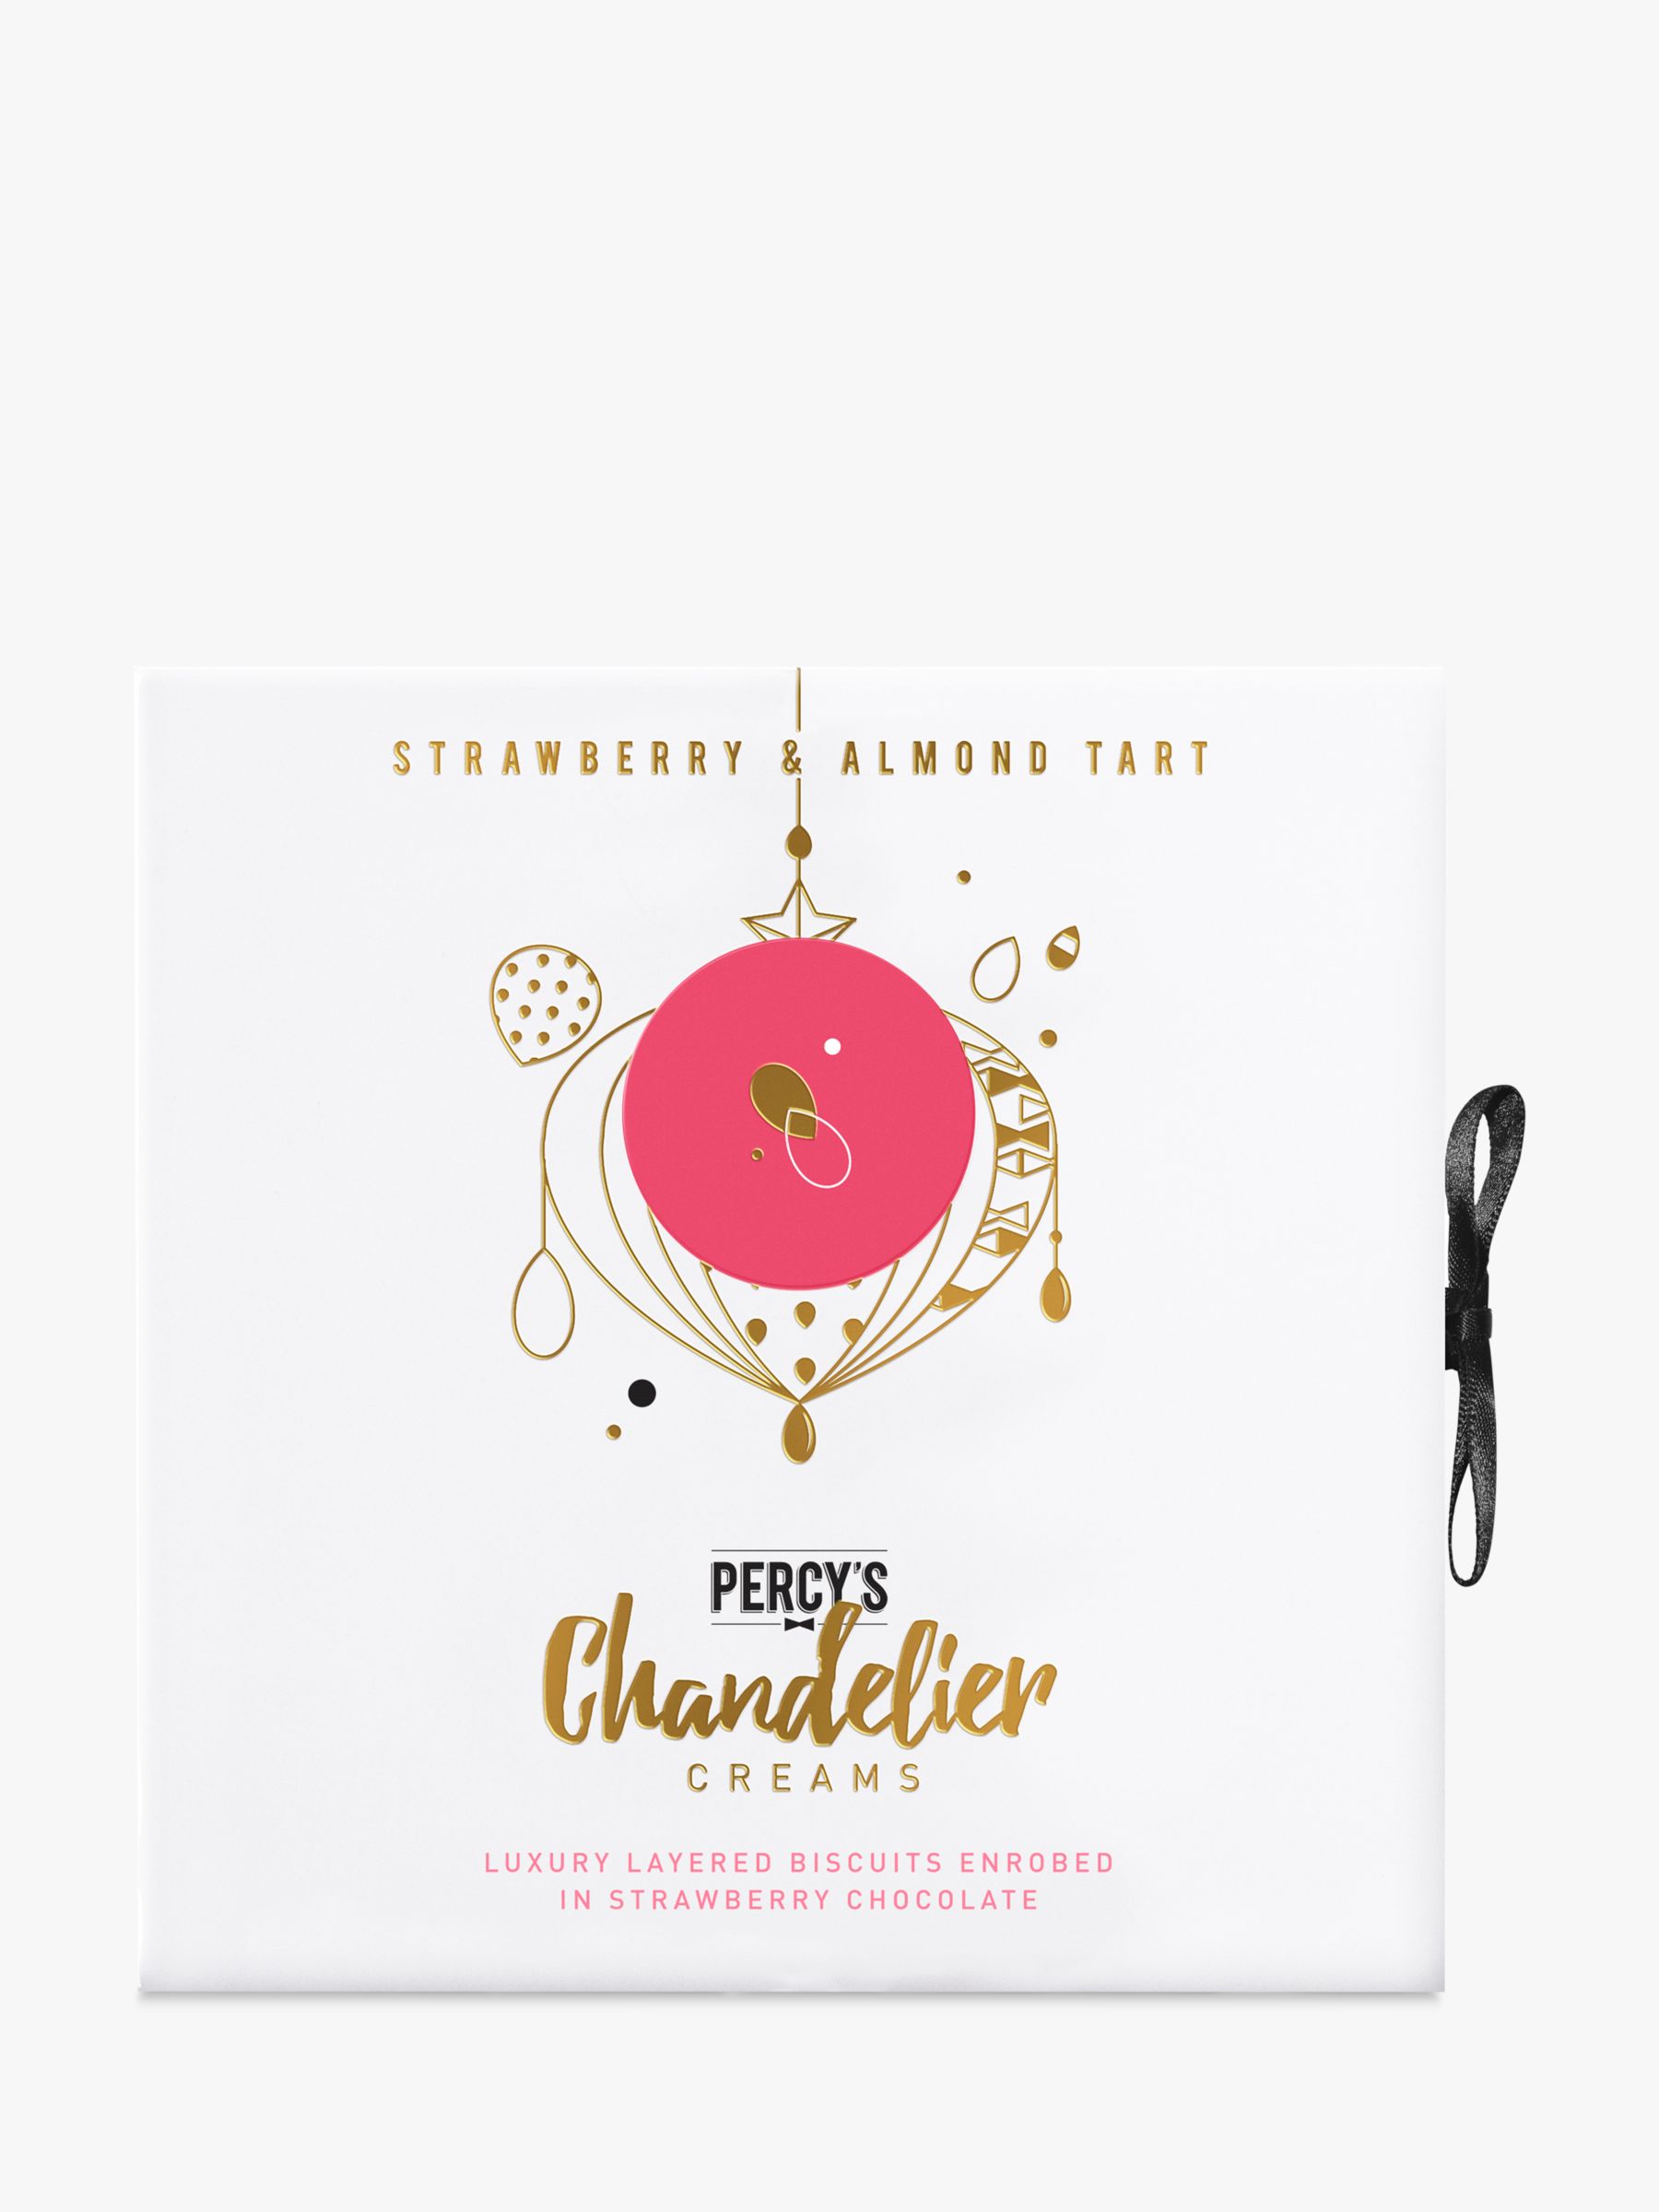 Percy's Bakery Chandelier Creams, Strawberry & Almond, 80g